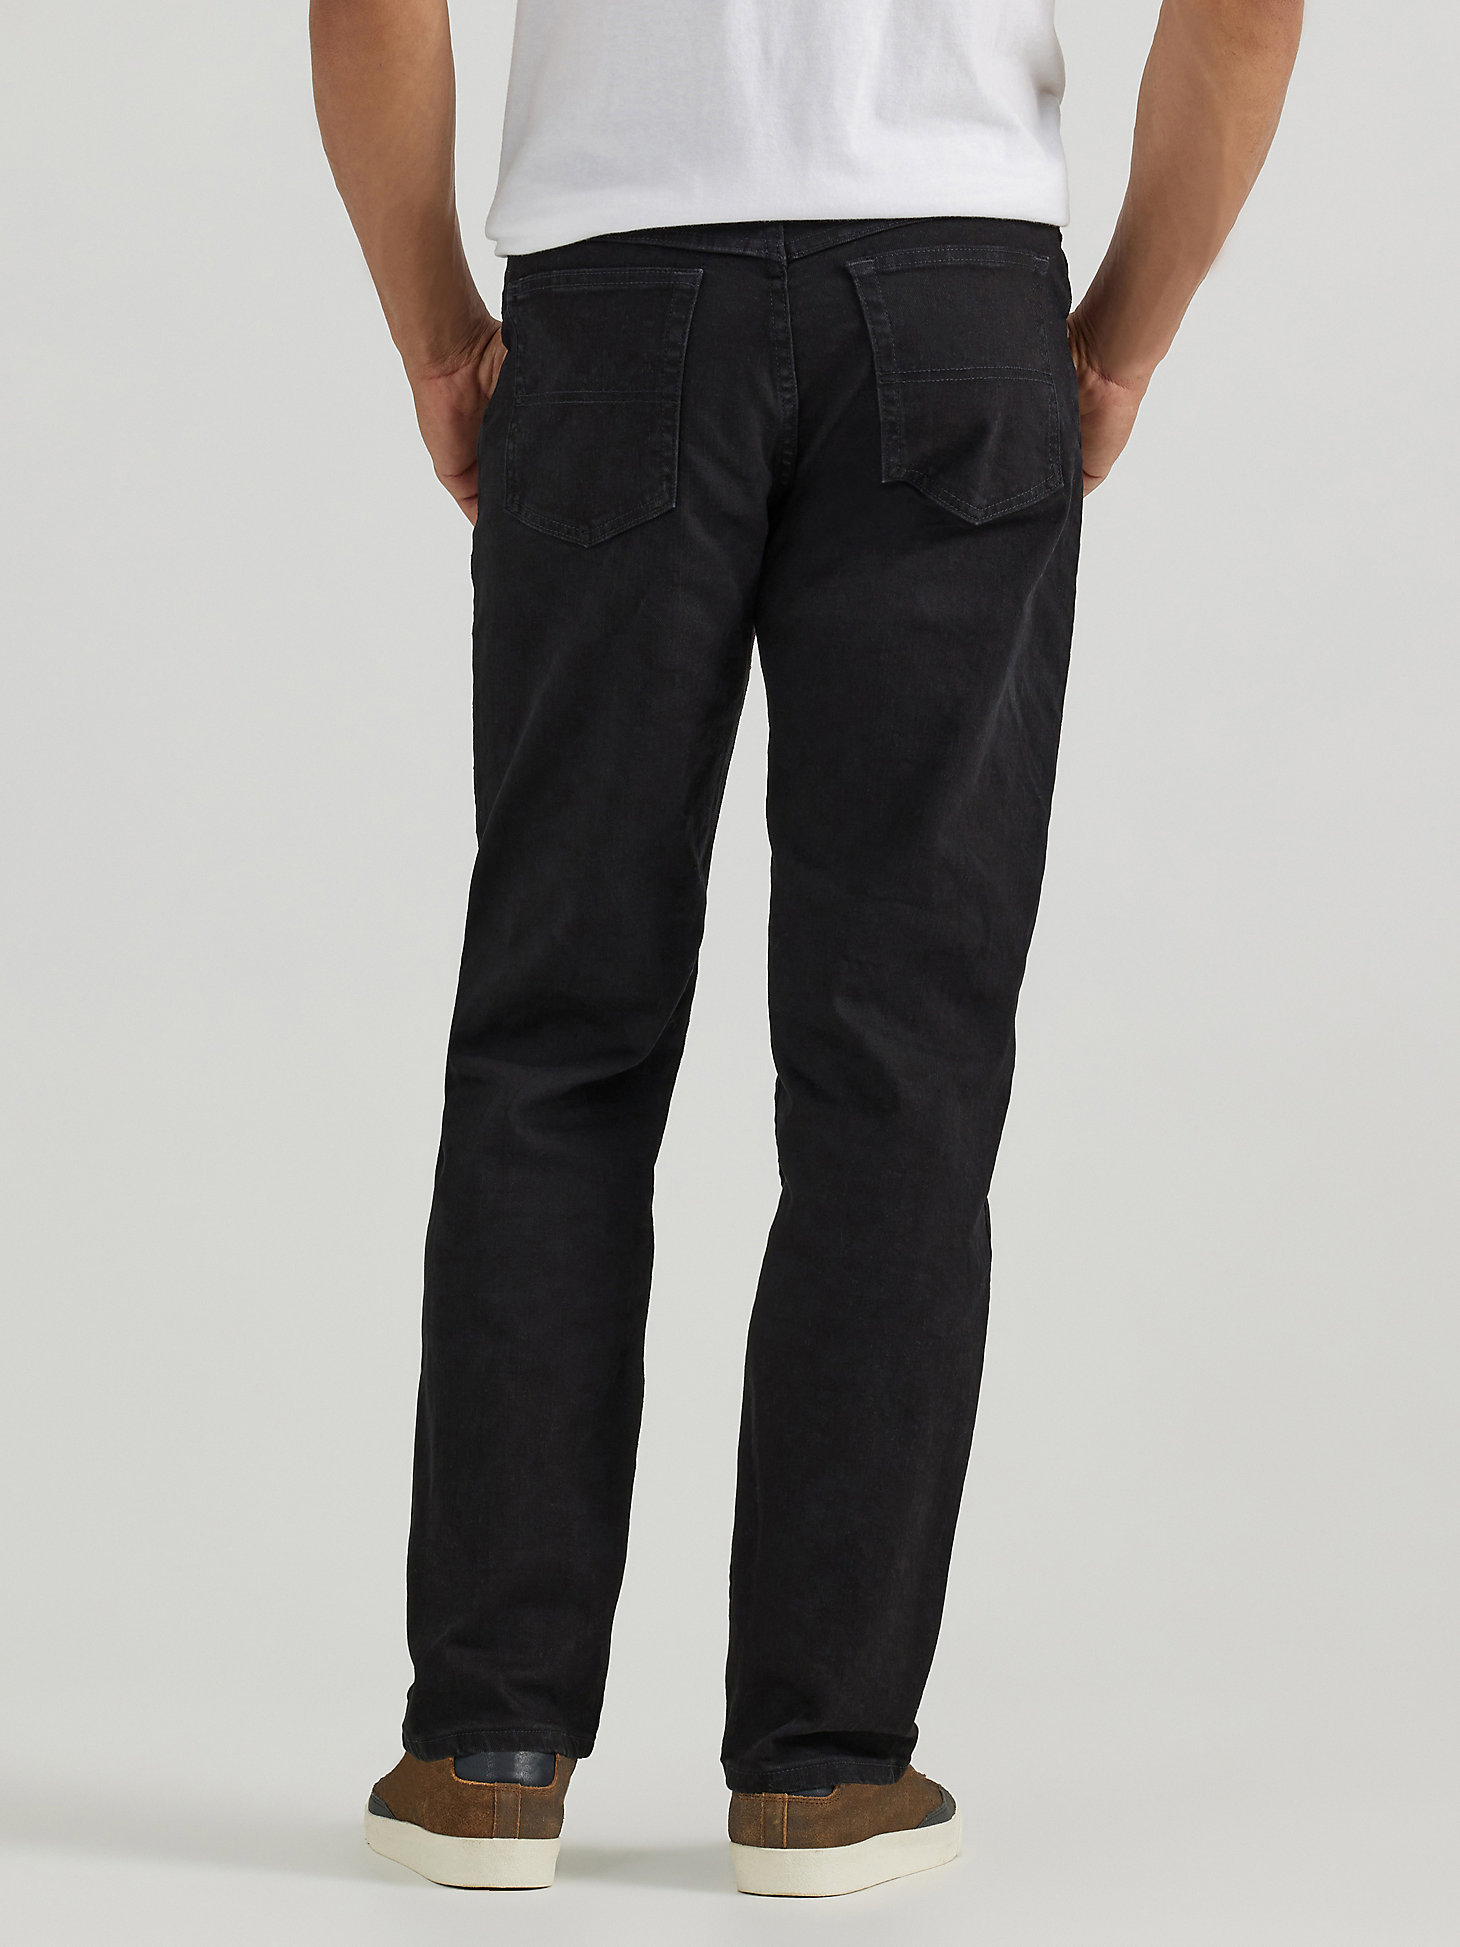 Men's Wrangler Authentics® Relaxed Fit Flex Jean in Black alternative view 1